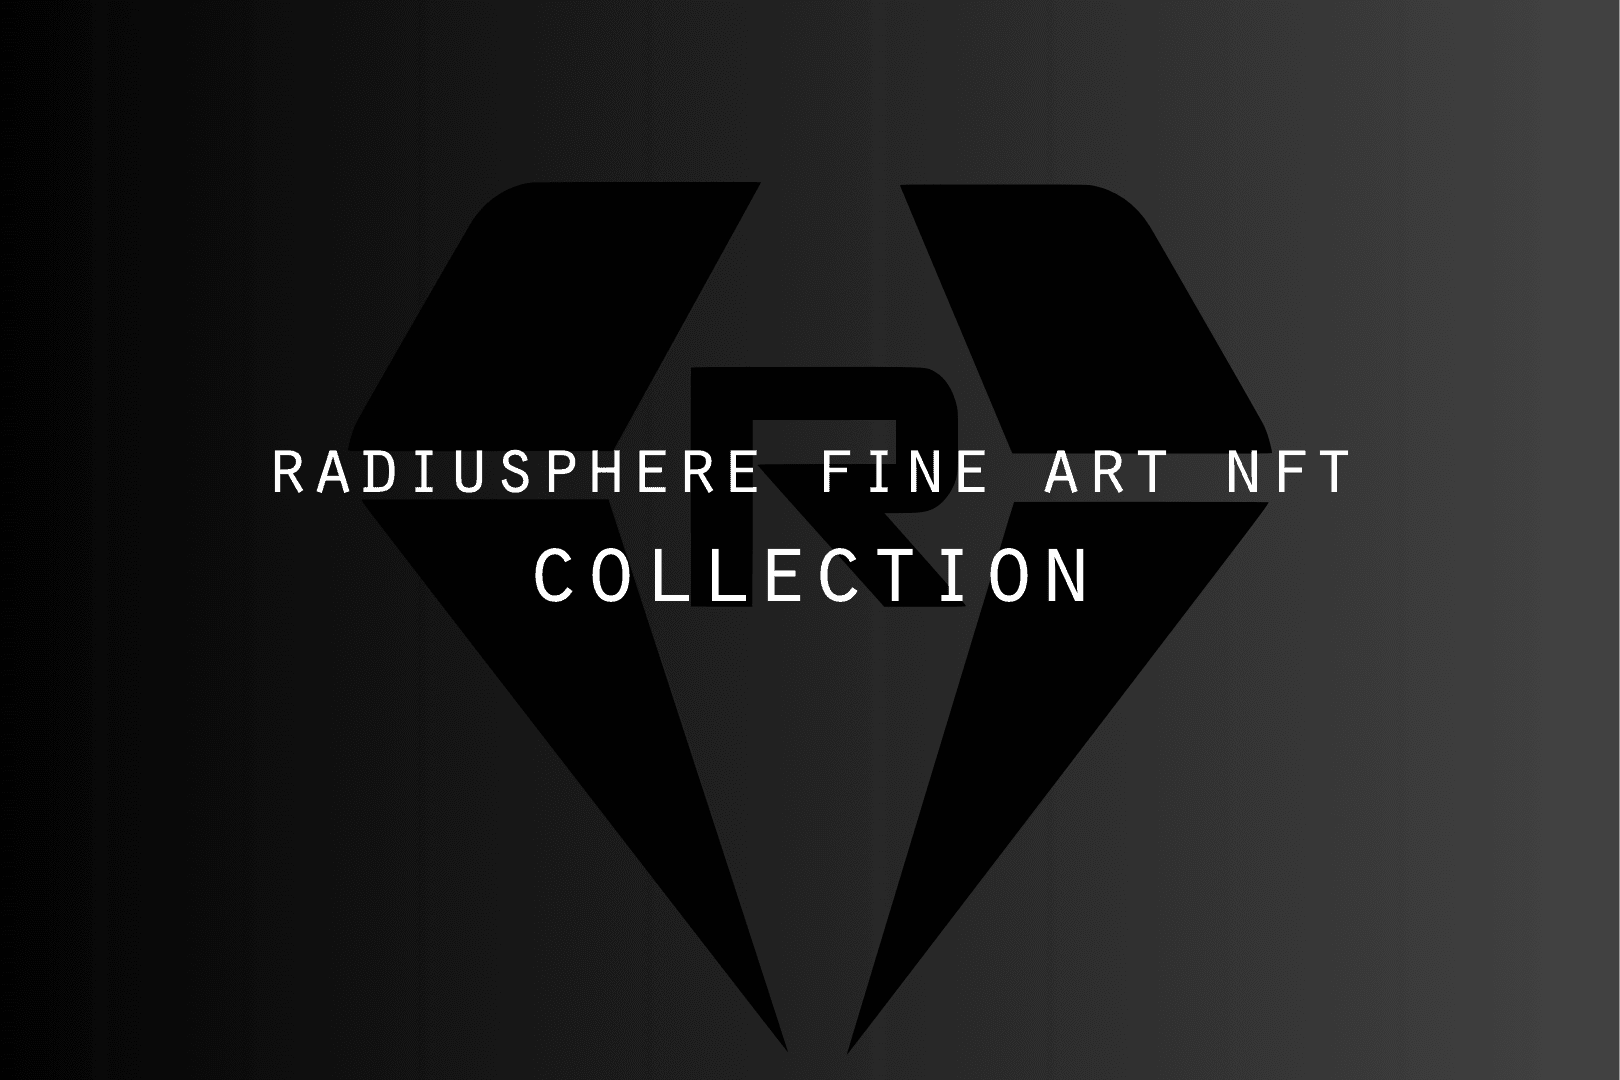 Radiusphere Fine Art NFT Collection